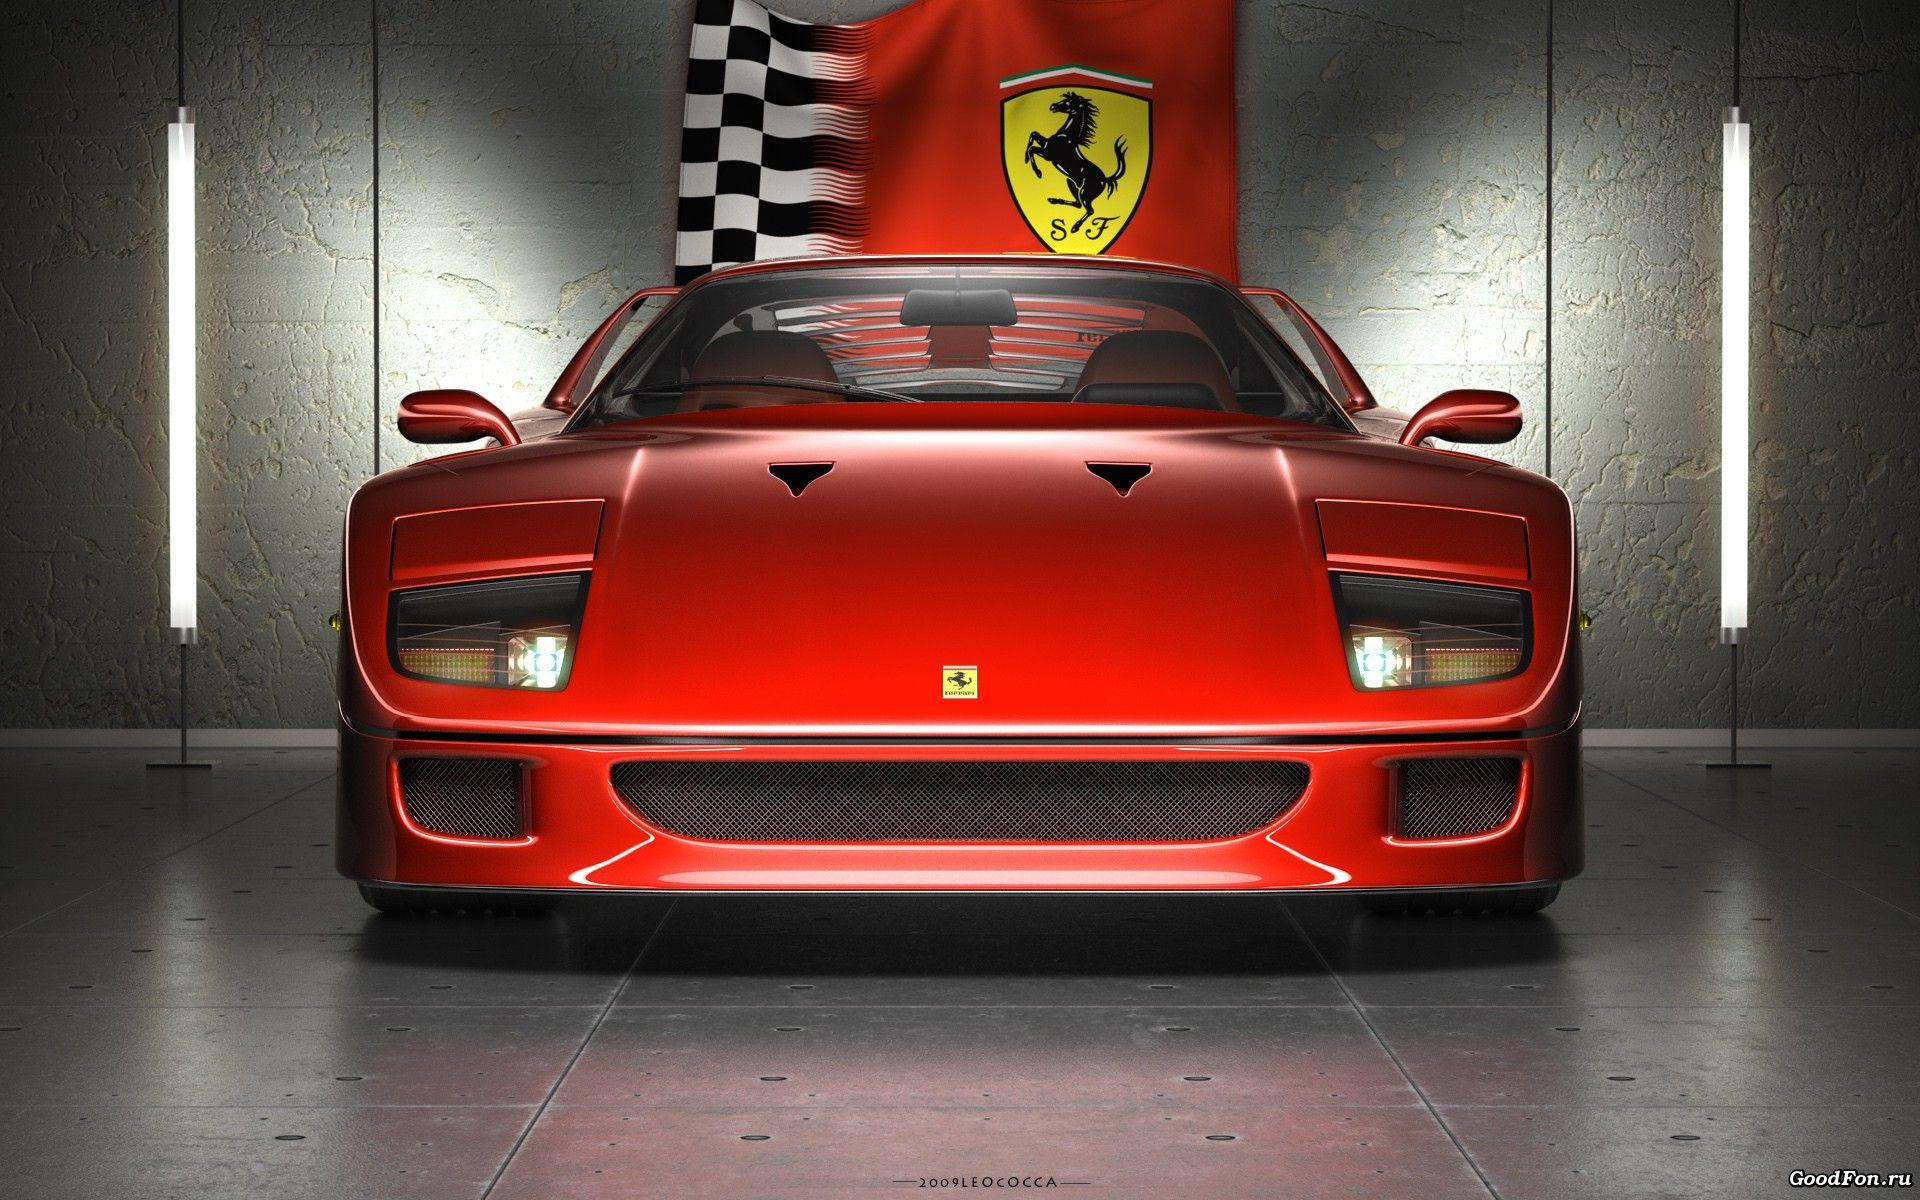 Ferrari F40 Wallpapers Top Free Ferrari F40 Backgrounds WallpaperAccess